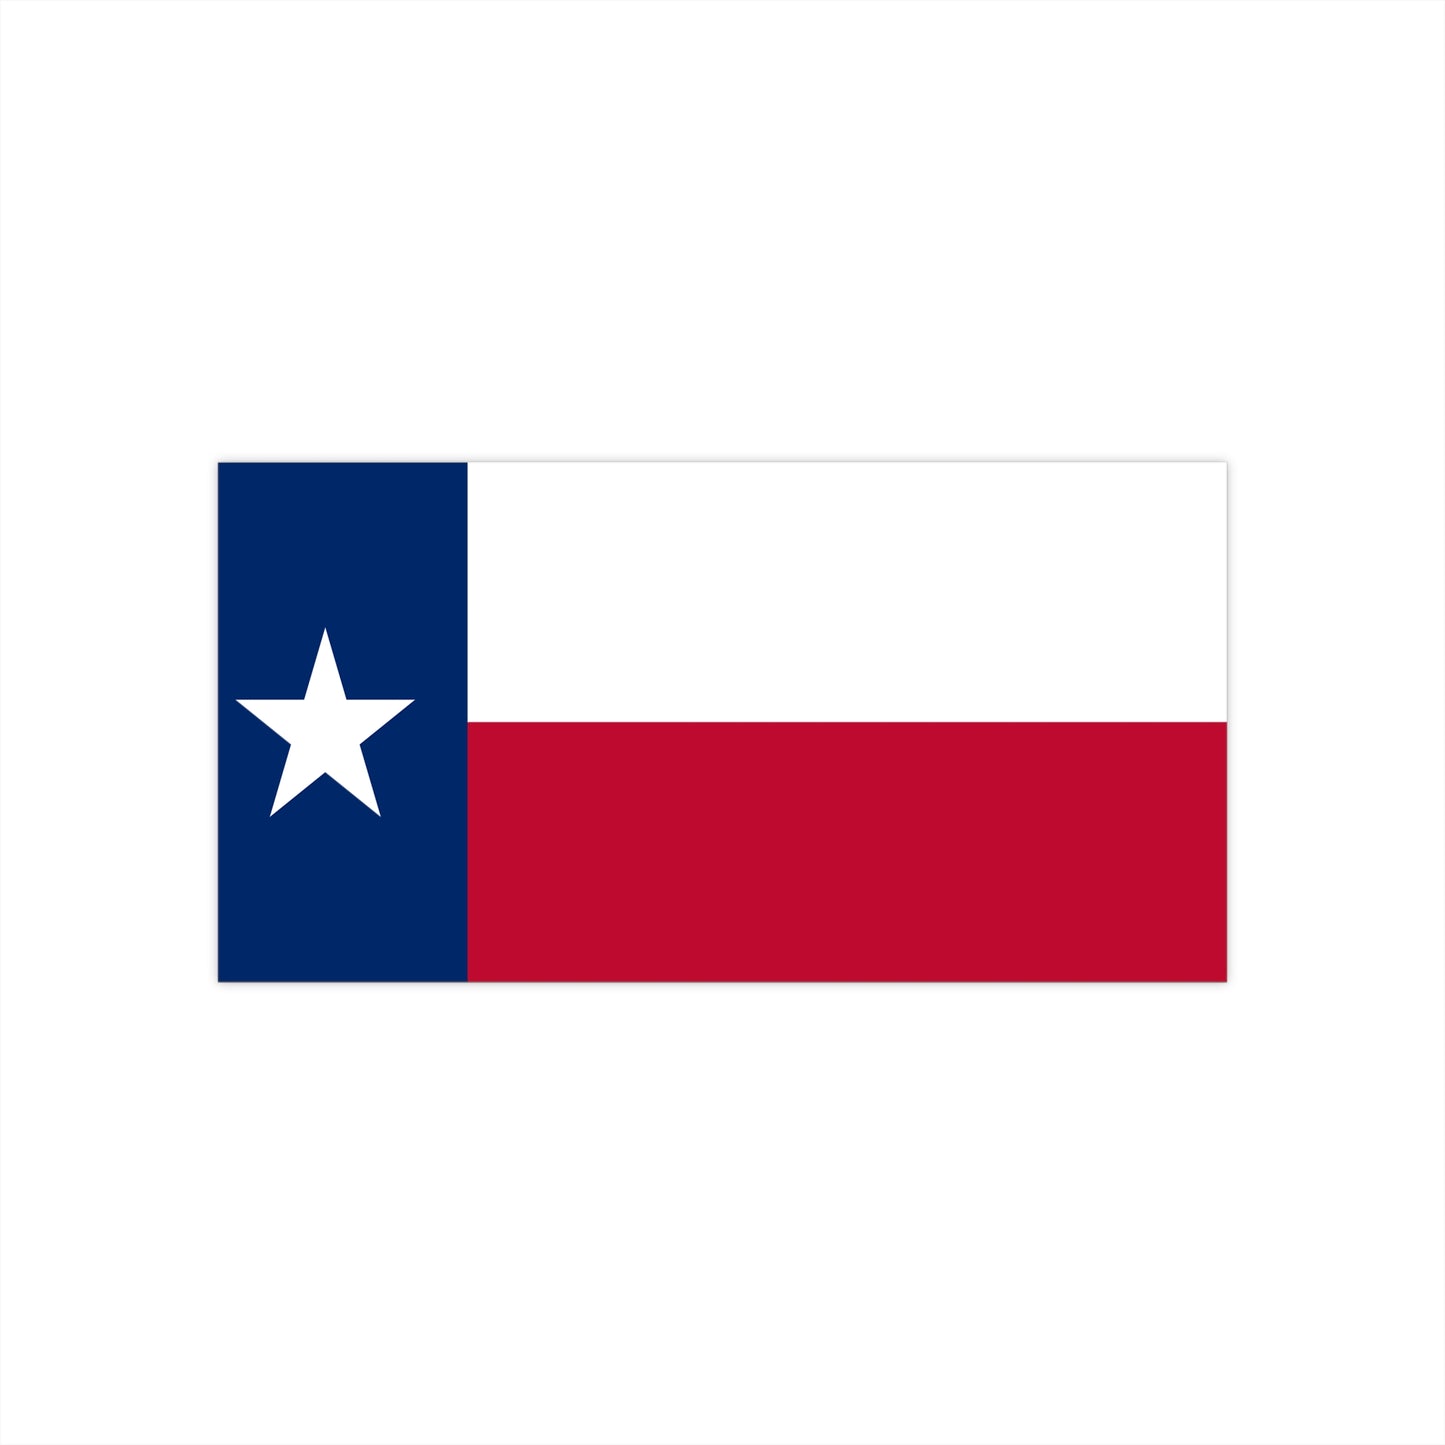 Texas Flag Bumper Stickers